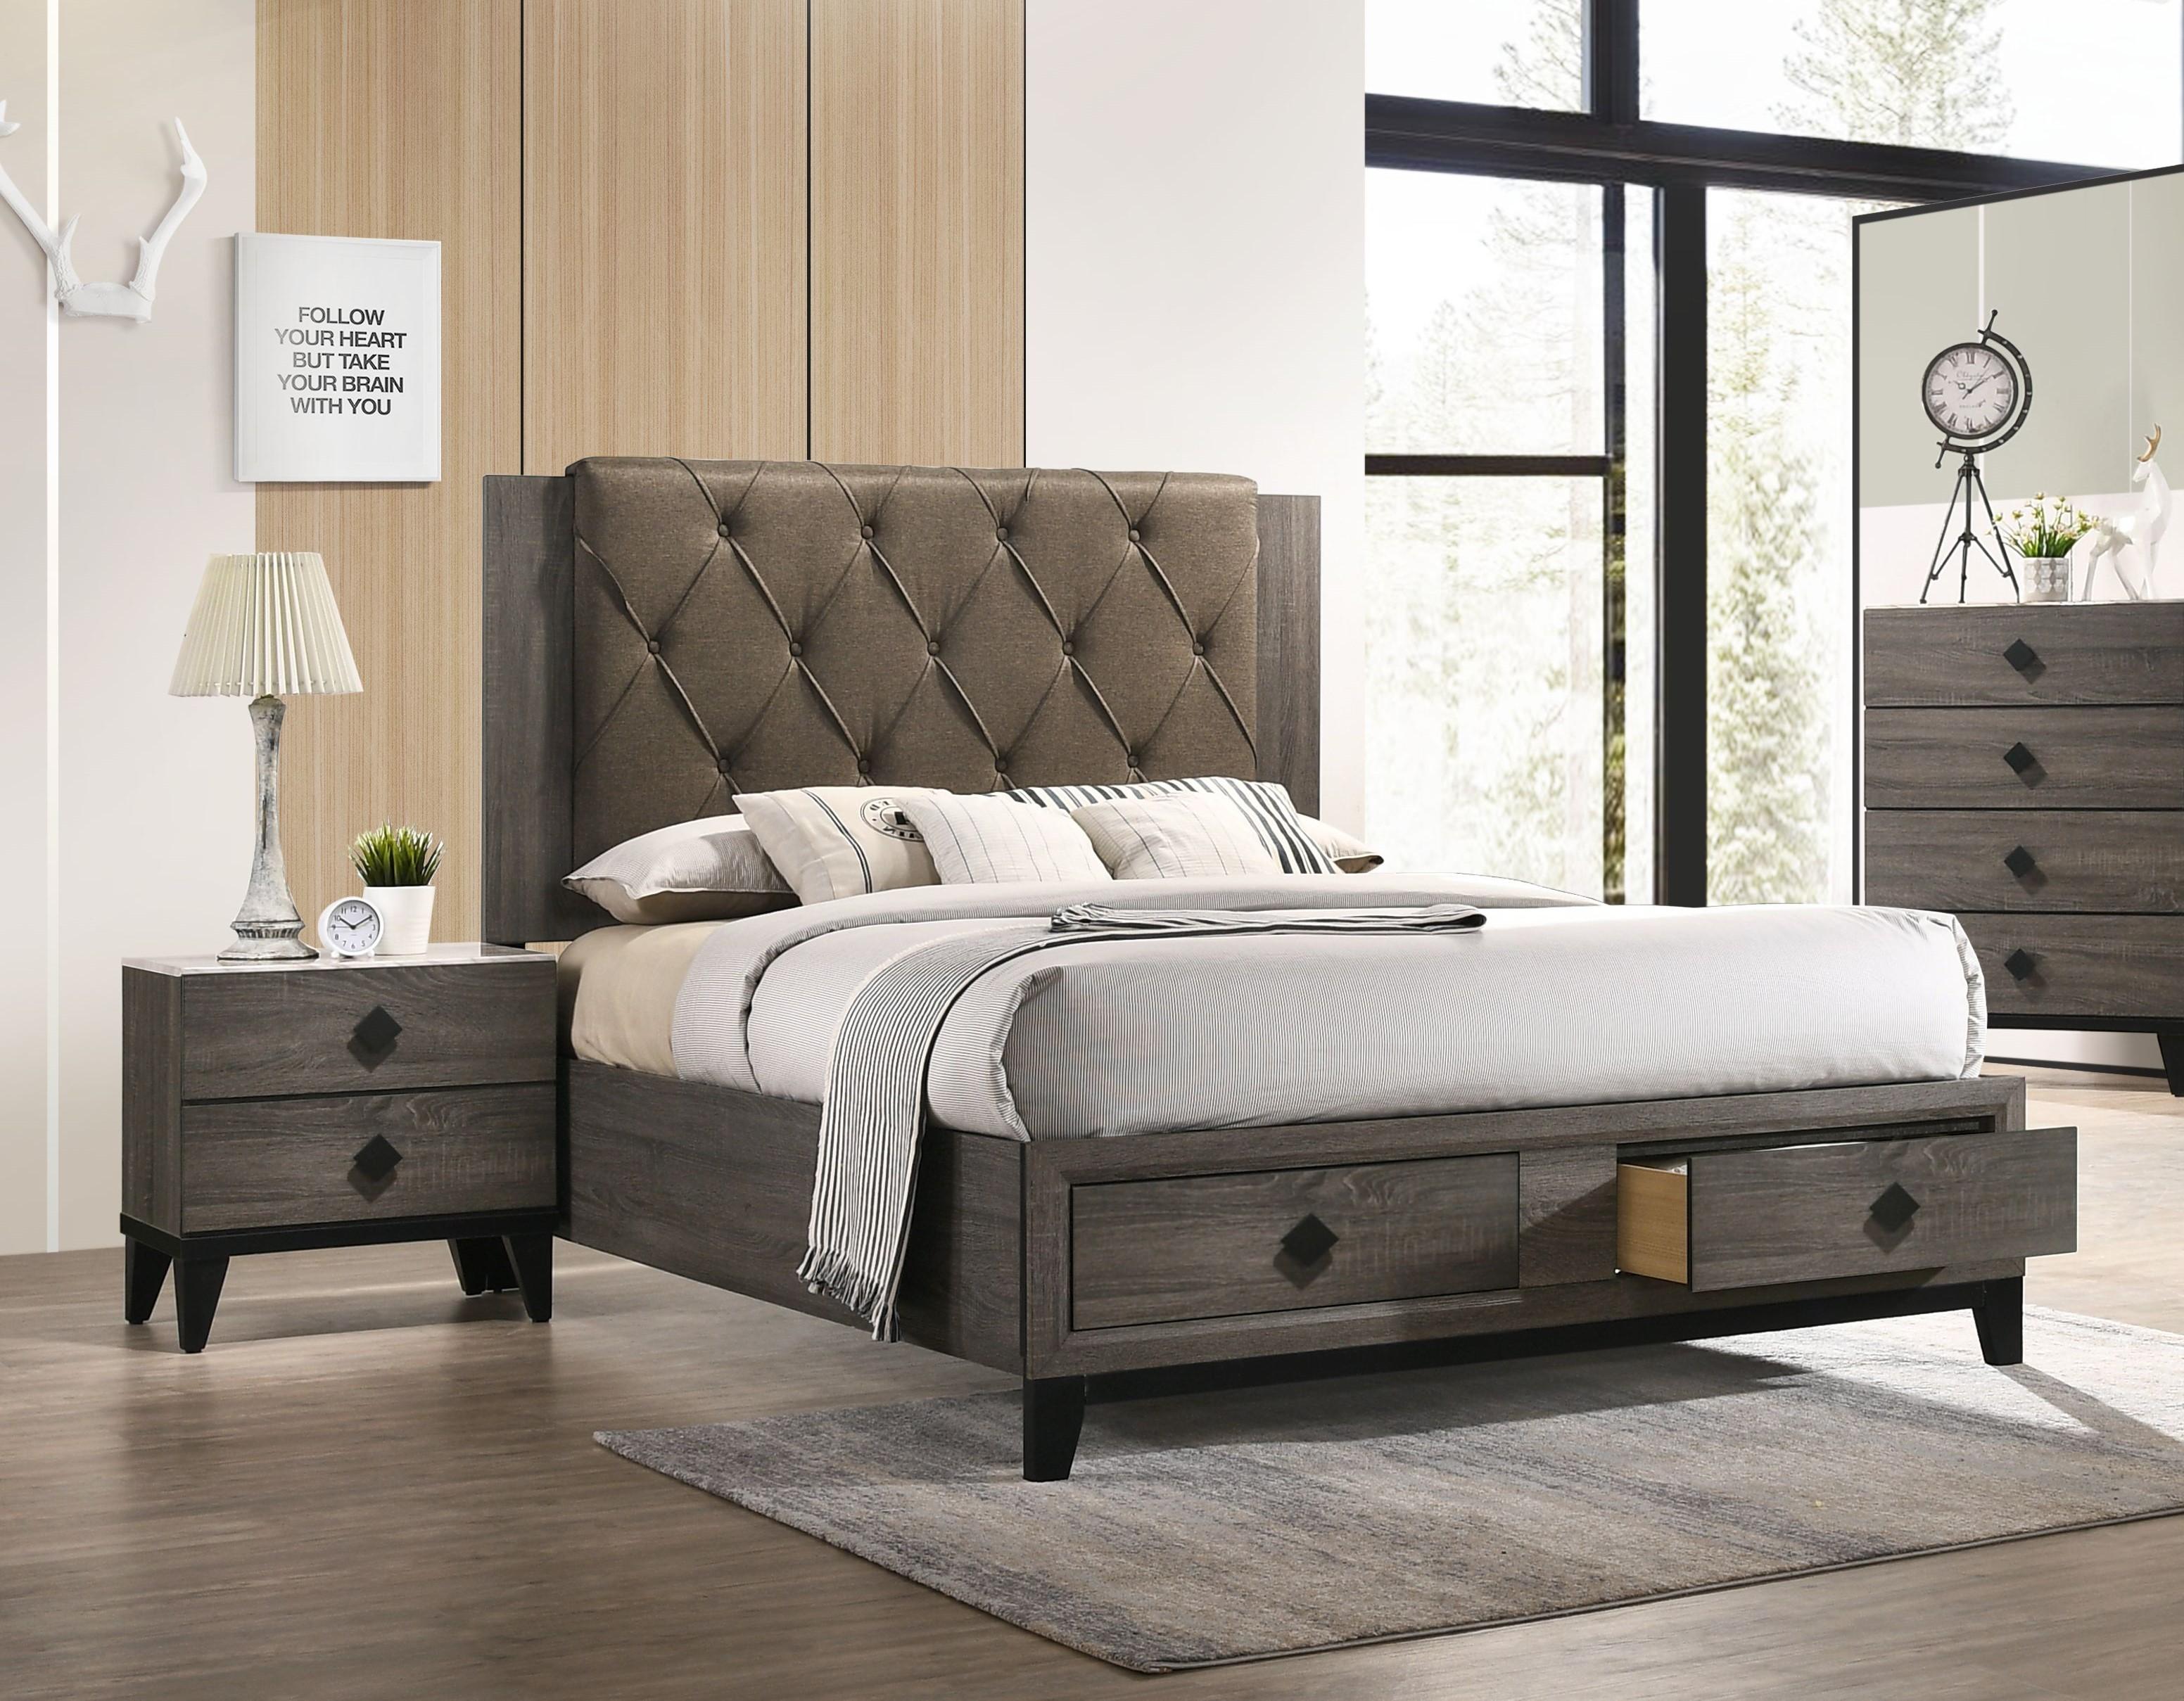 Transitional Storage Bedroom Set Avantika-27670Q-S 27670Q-S-3pcs in Brown Oak and Grey Fabric